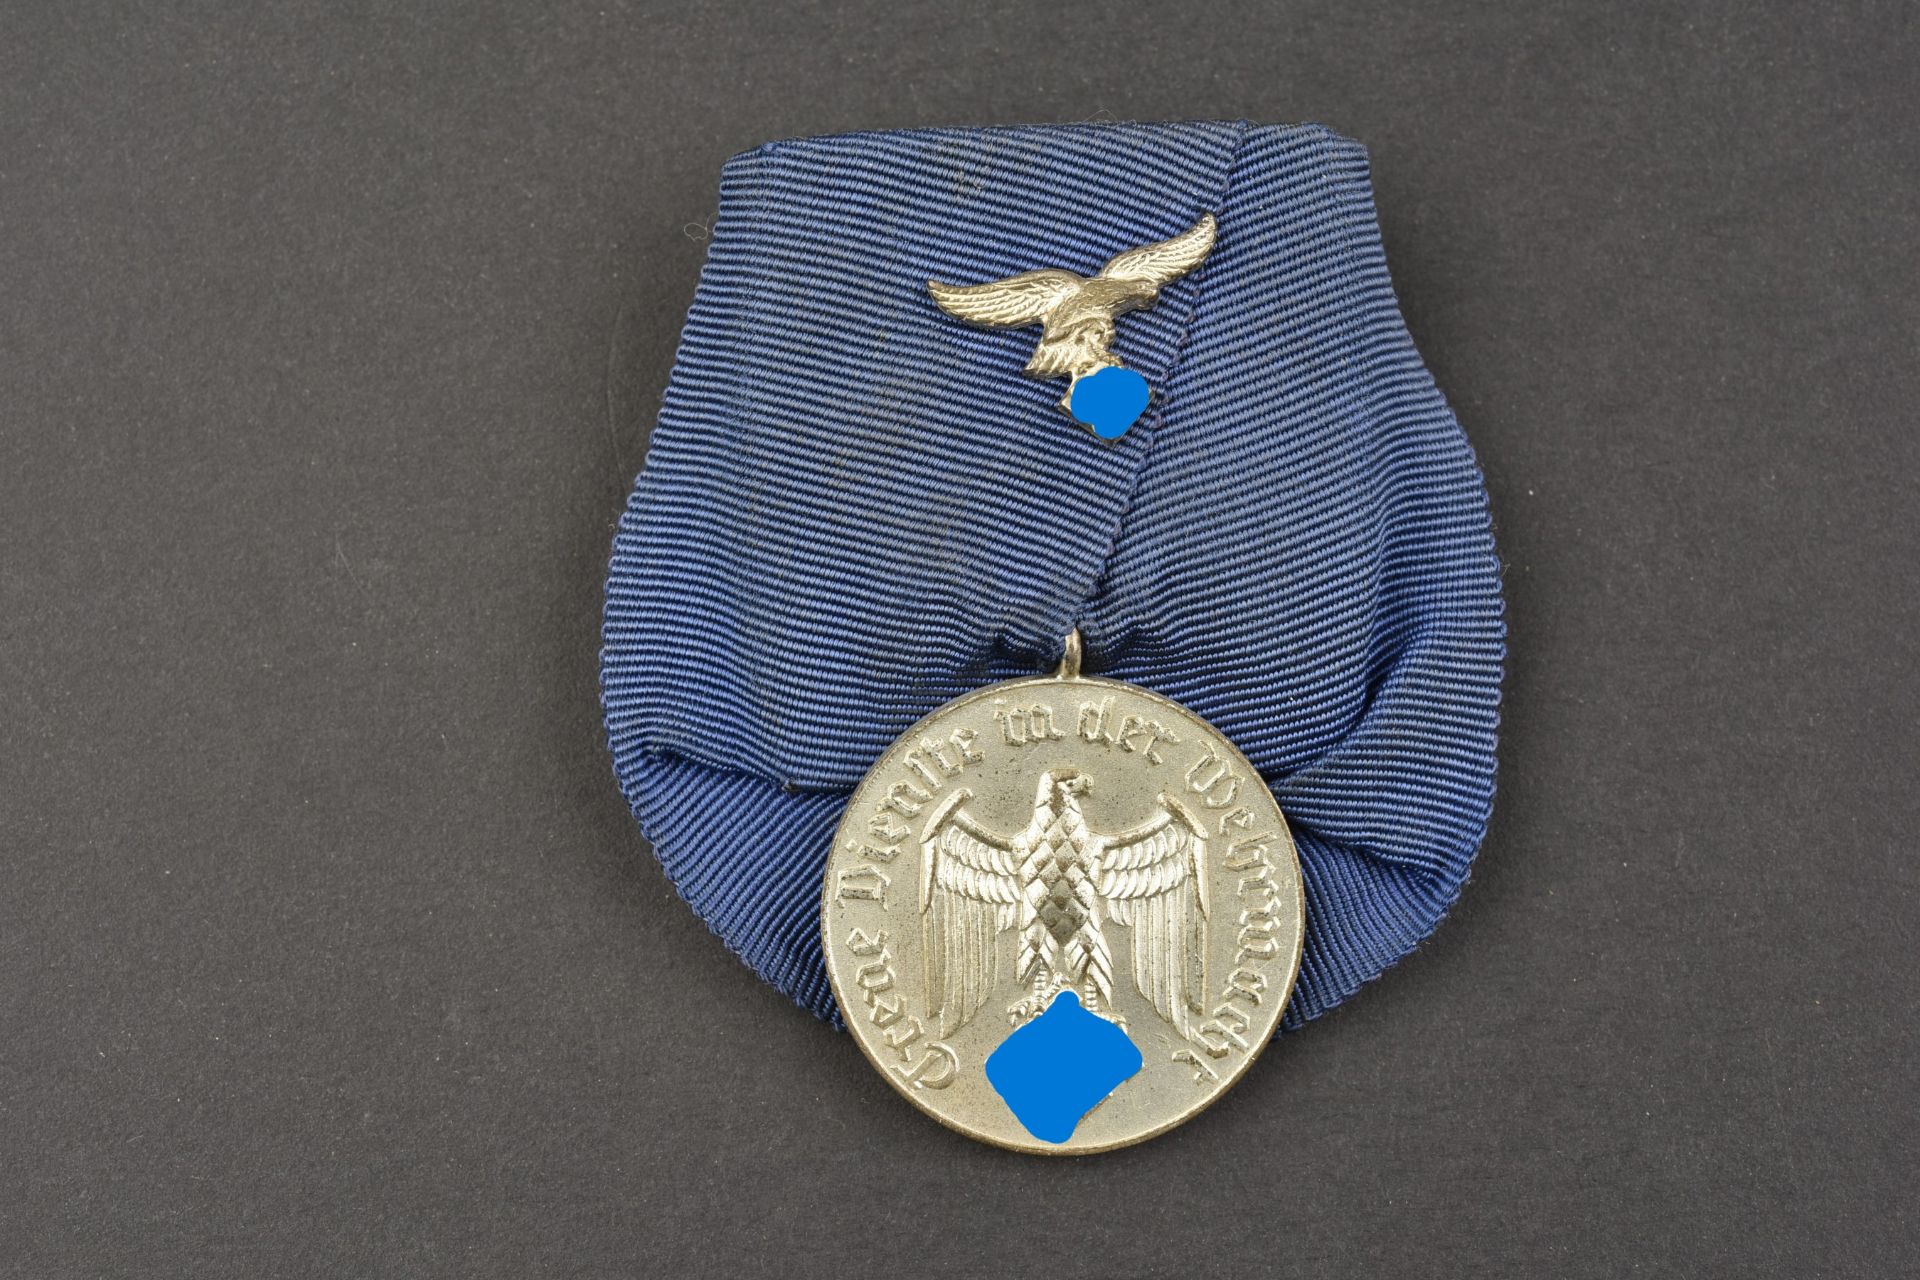 Medaille service LW. LW service medal.